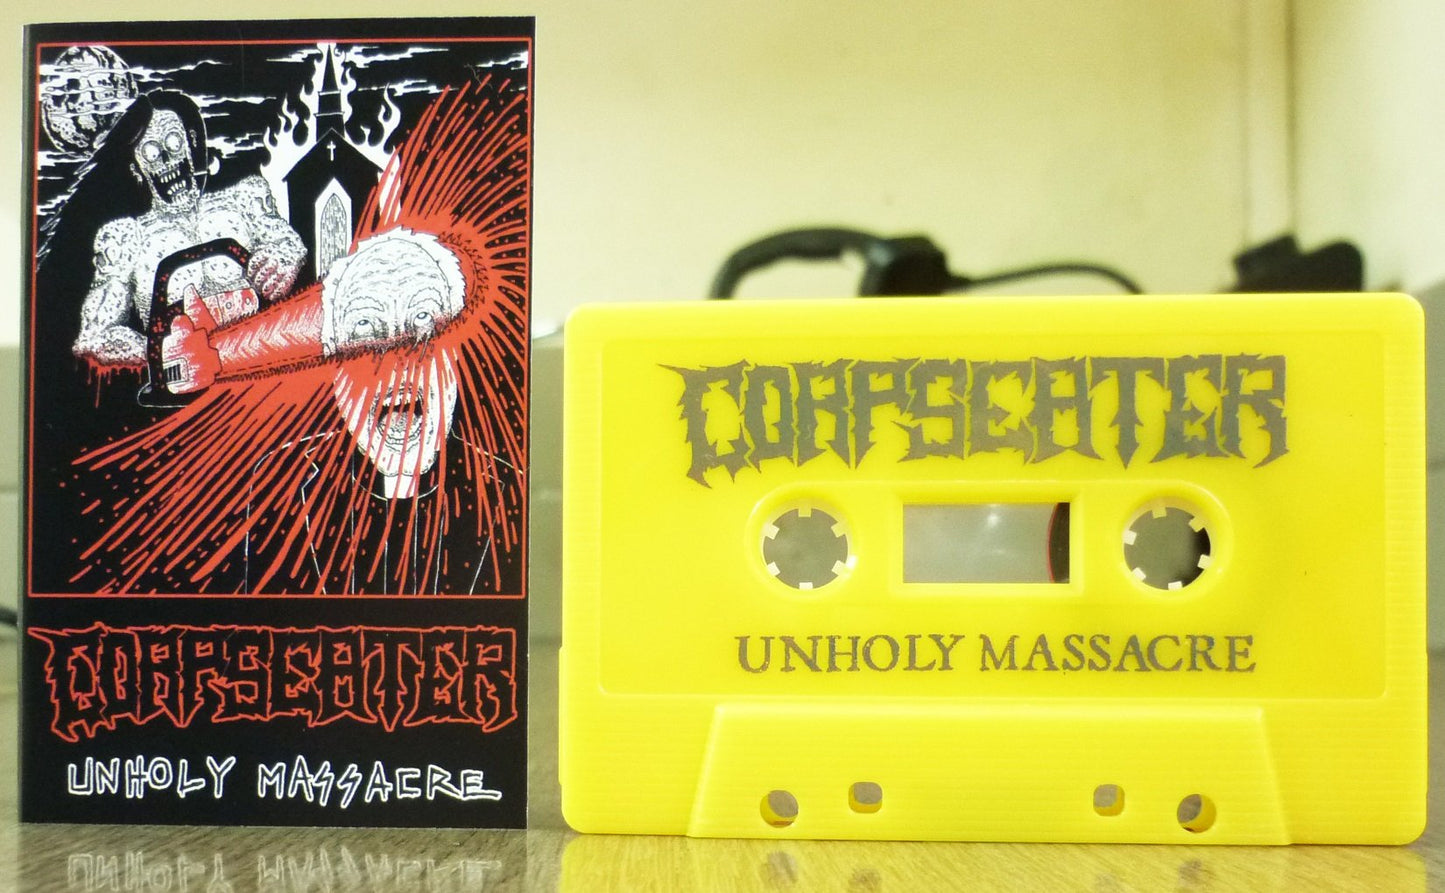 CORPSEATER "Unholy Massacre" Tape